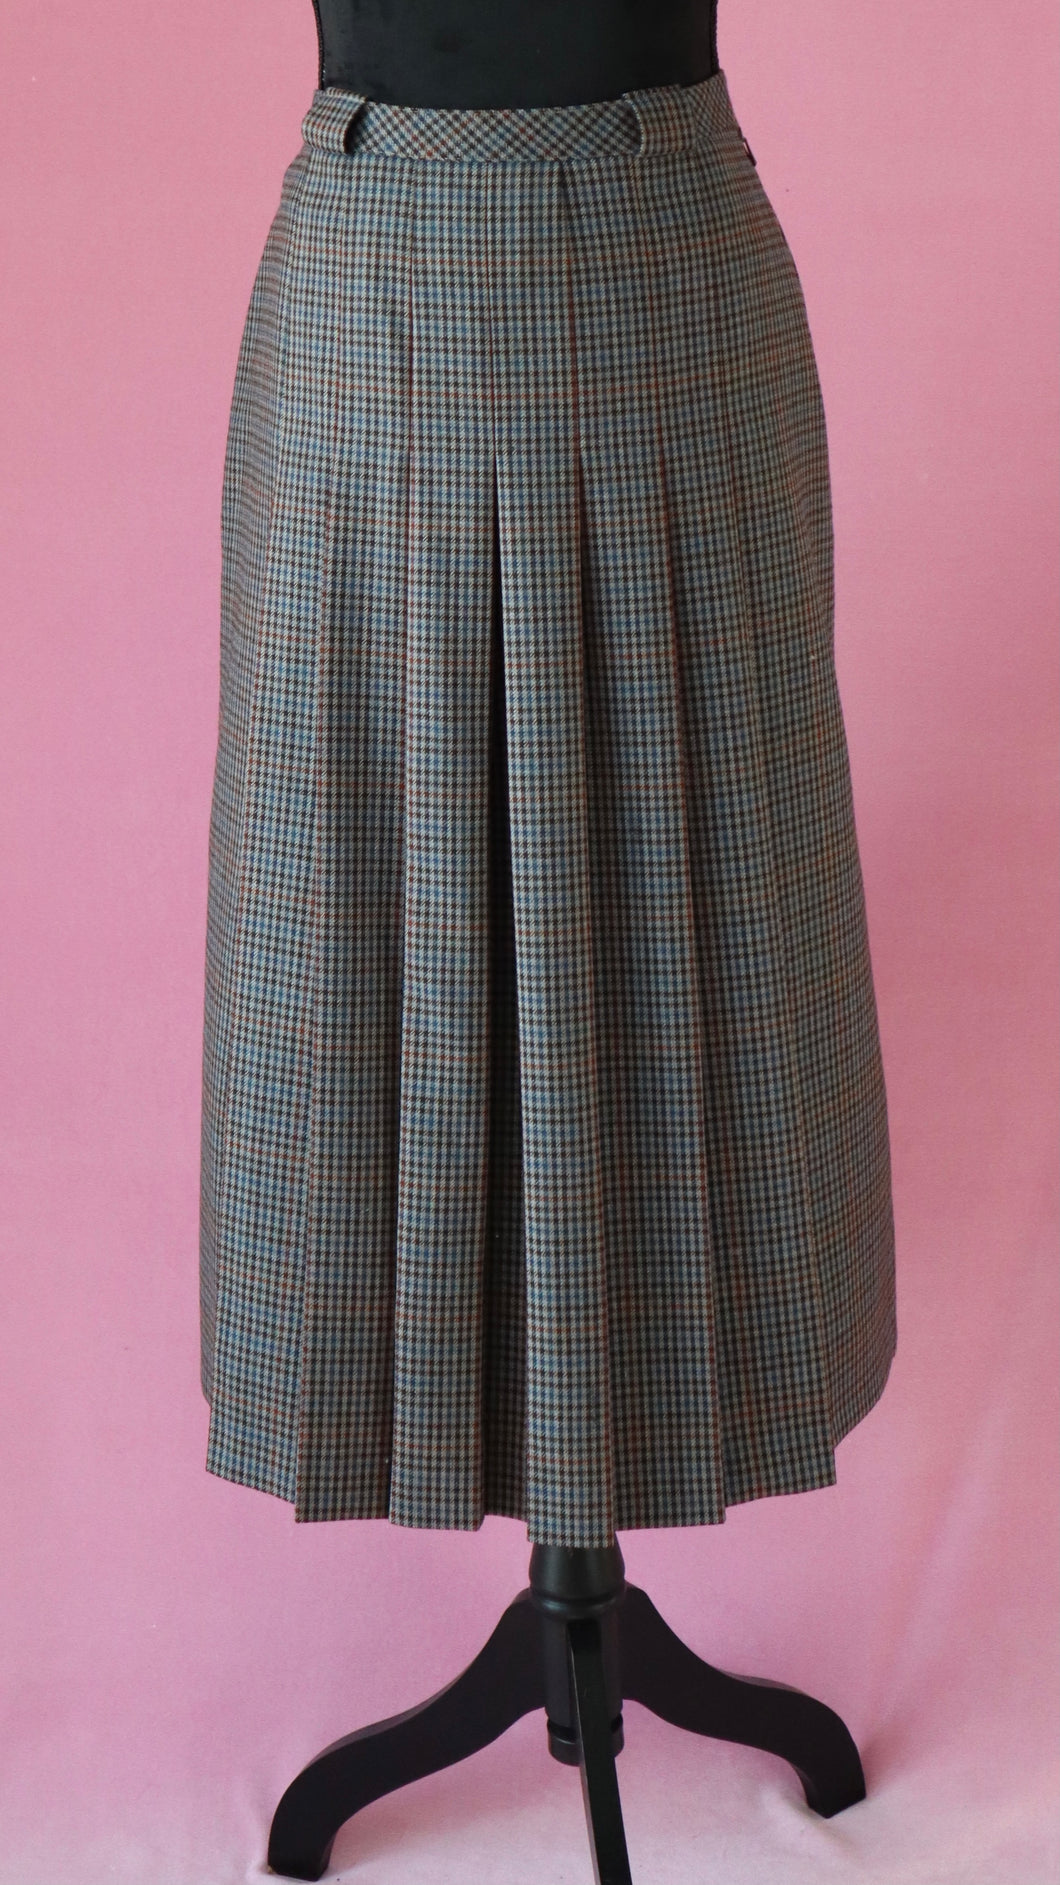 Lady H. Hammer 1970s wool plaid skirt | modern size large